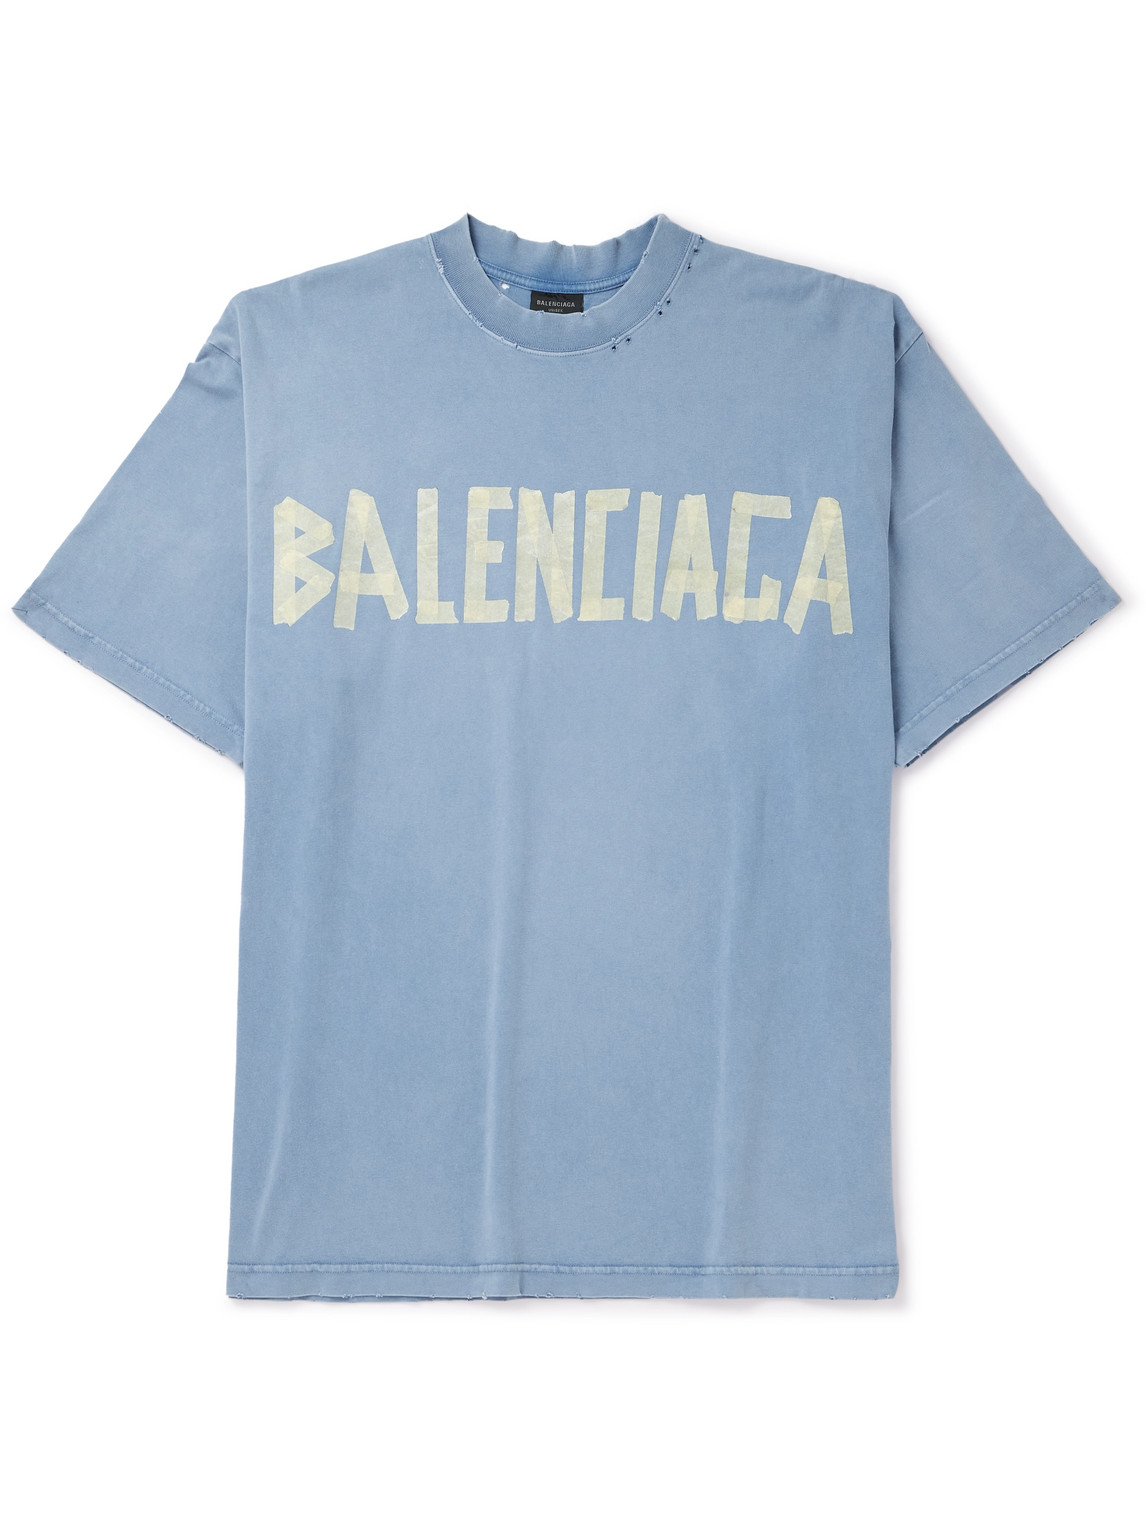 Balenciaga - Oversized Distressed Logo-Print Cotton-Jersey T-Shirt - Men - Blue - S von Balenciaga